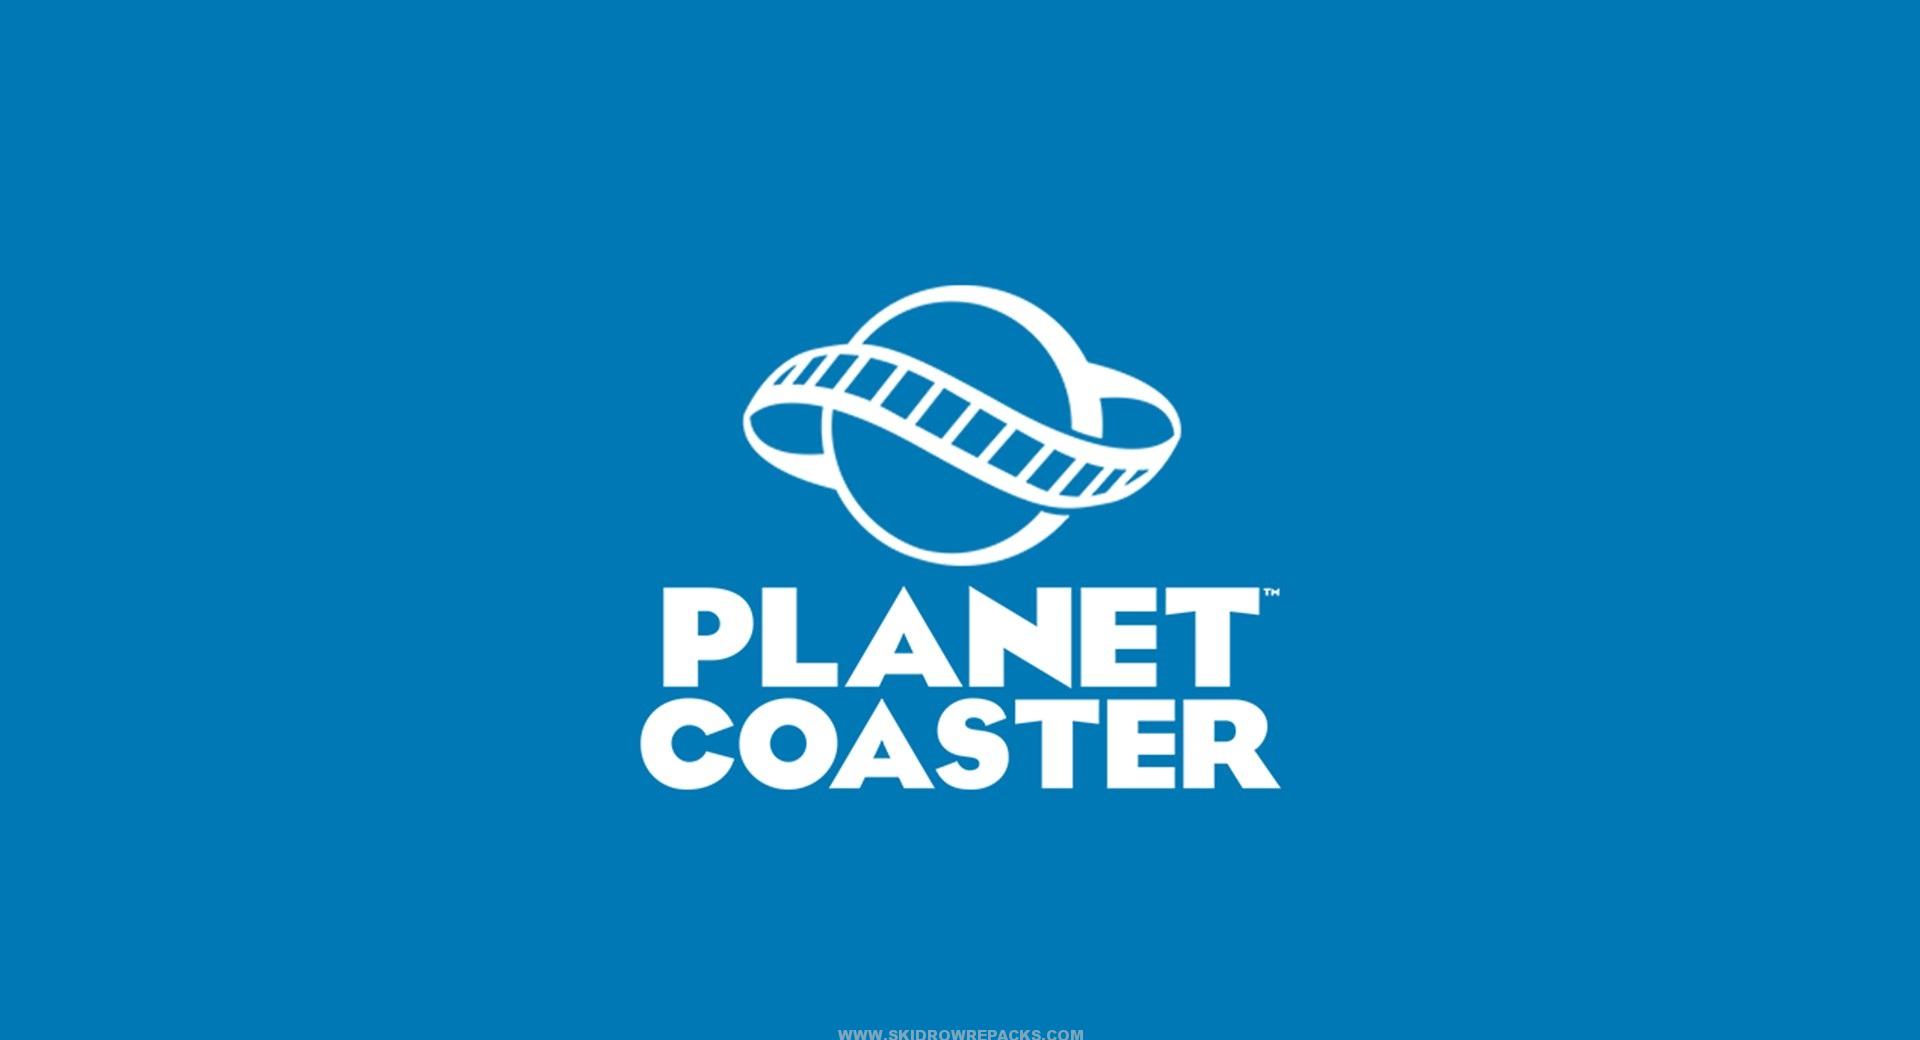 Planet coaster download